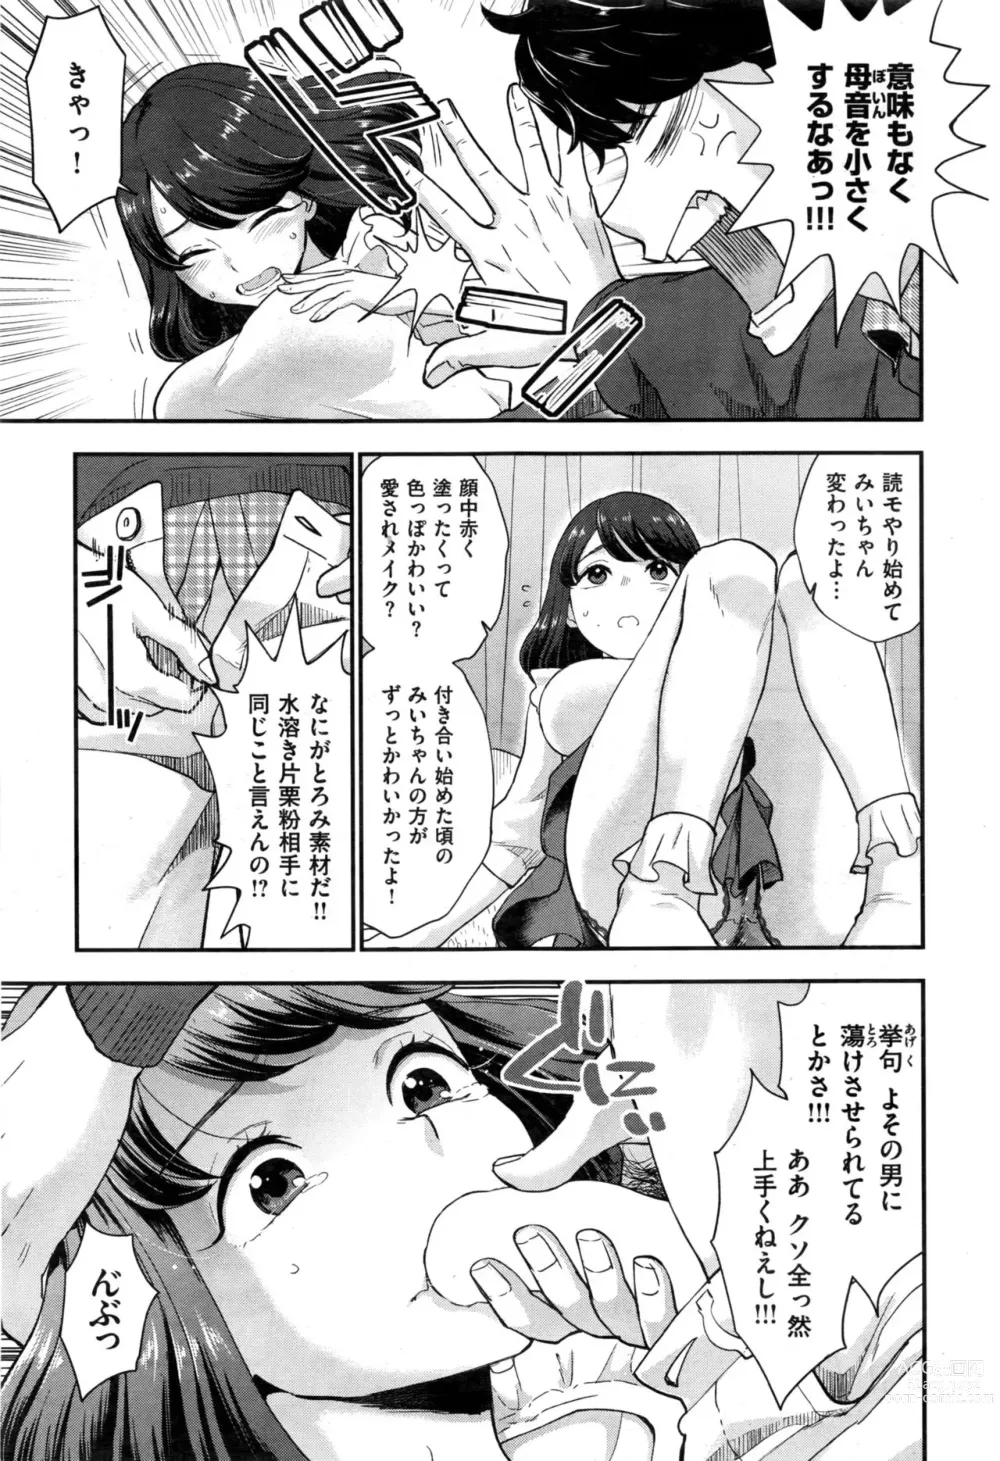 Page 5 of manga Masaka Sakasama